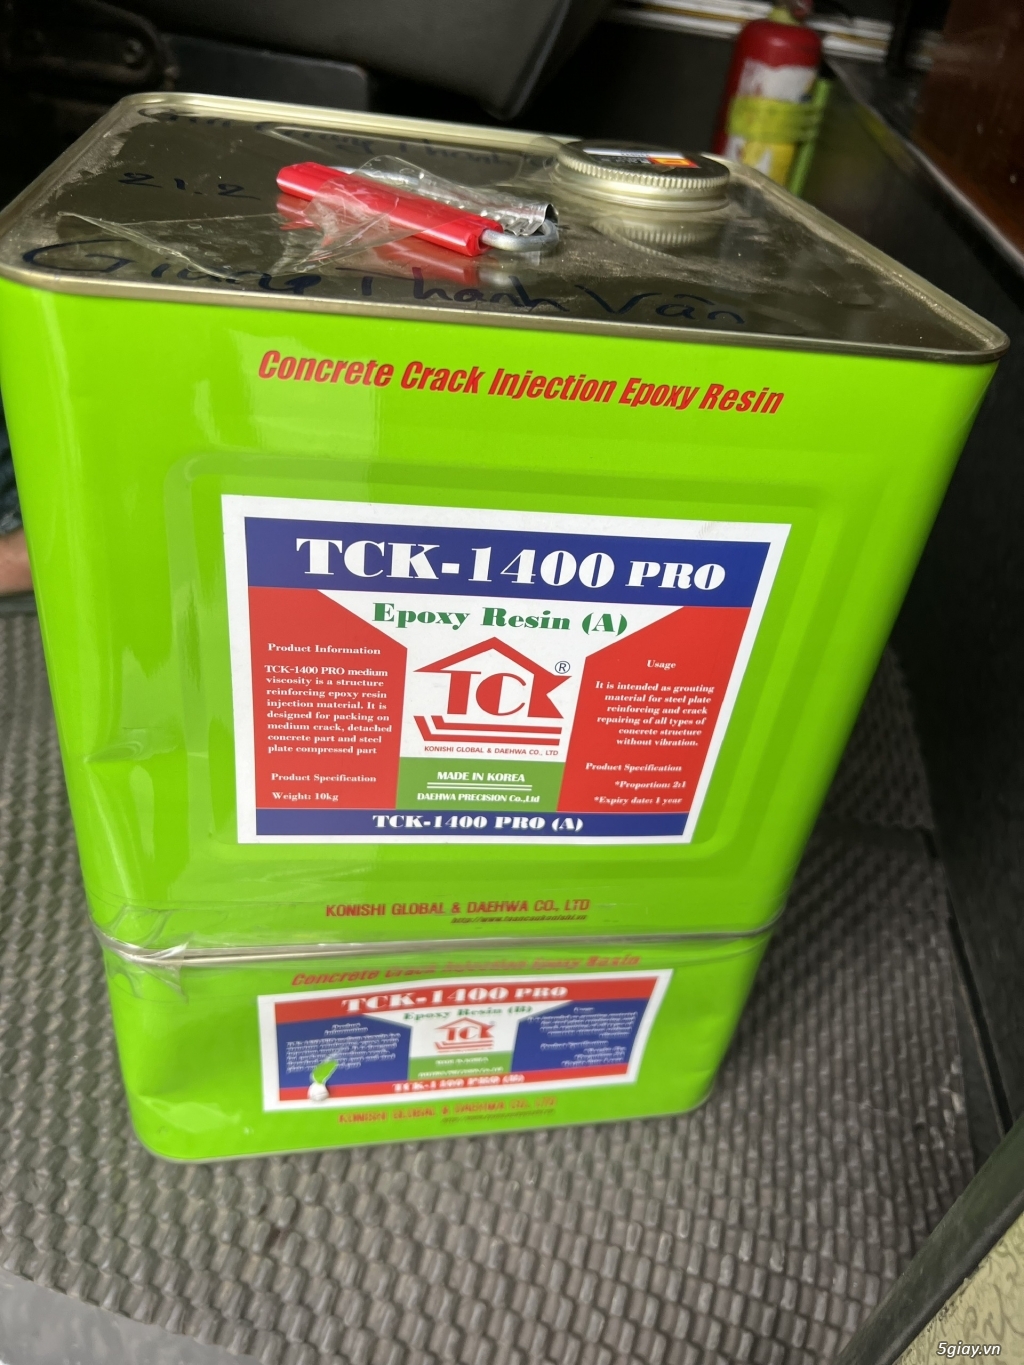 Keo chống nứt TCK-E500, epoxy 1400, E206, TCK-e2800 xuất xứ Hàn Quốc - 4